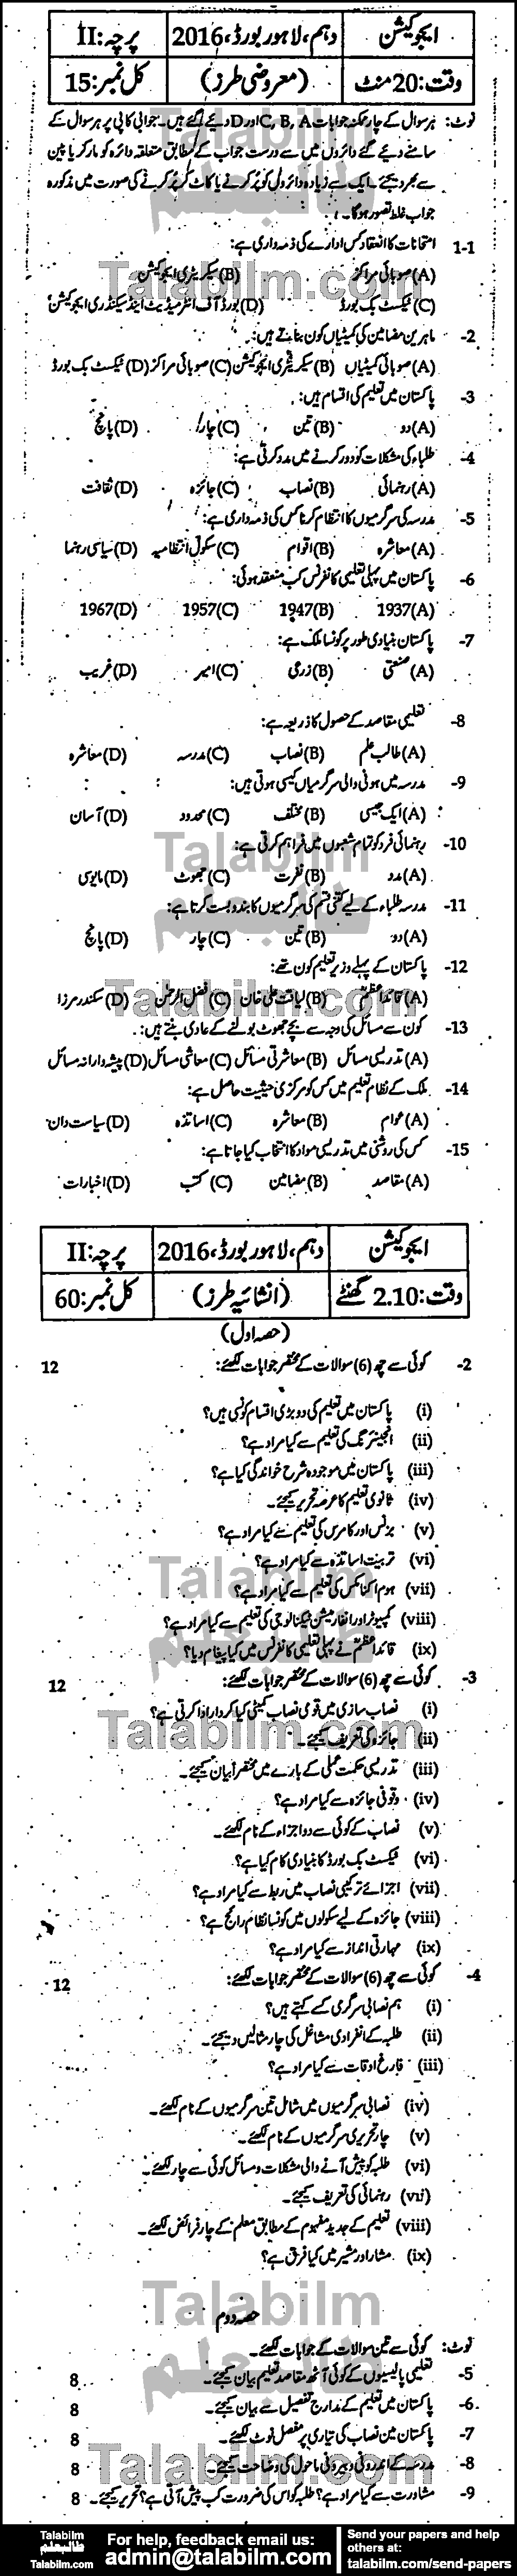 Education 0 past paper for Urdu Medium 2016 Group-I